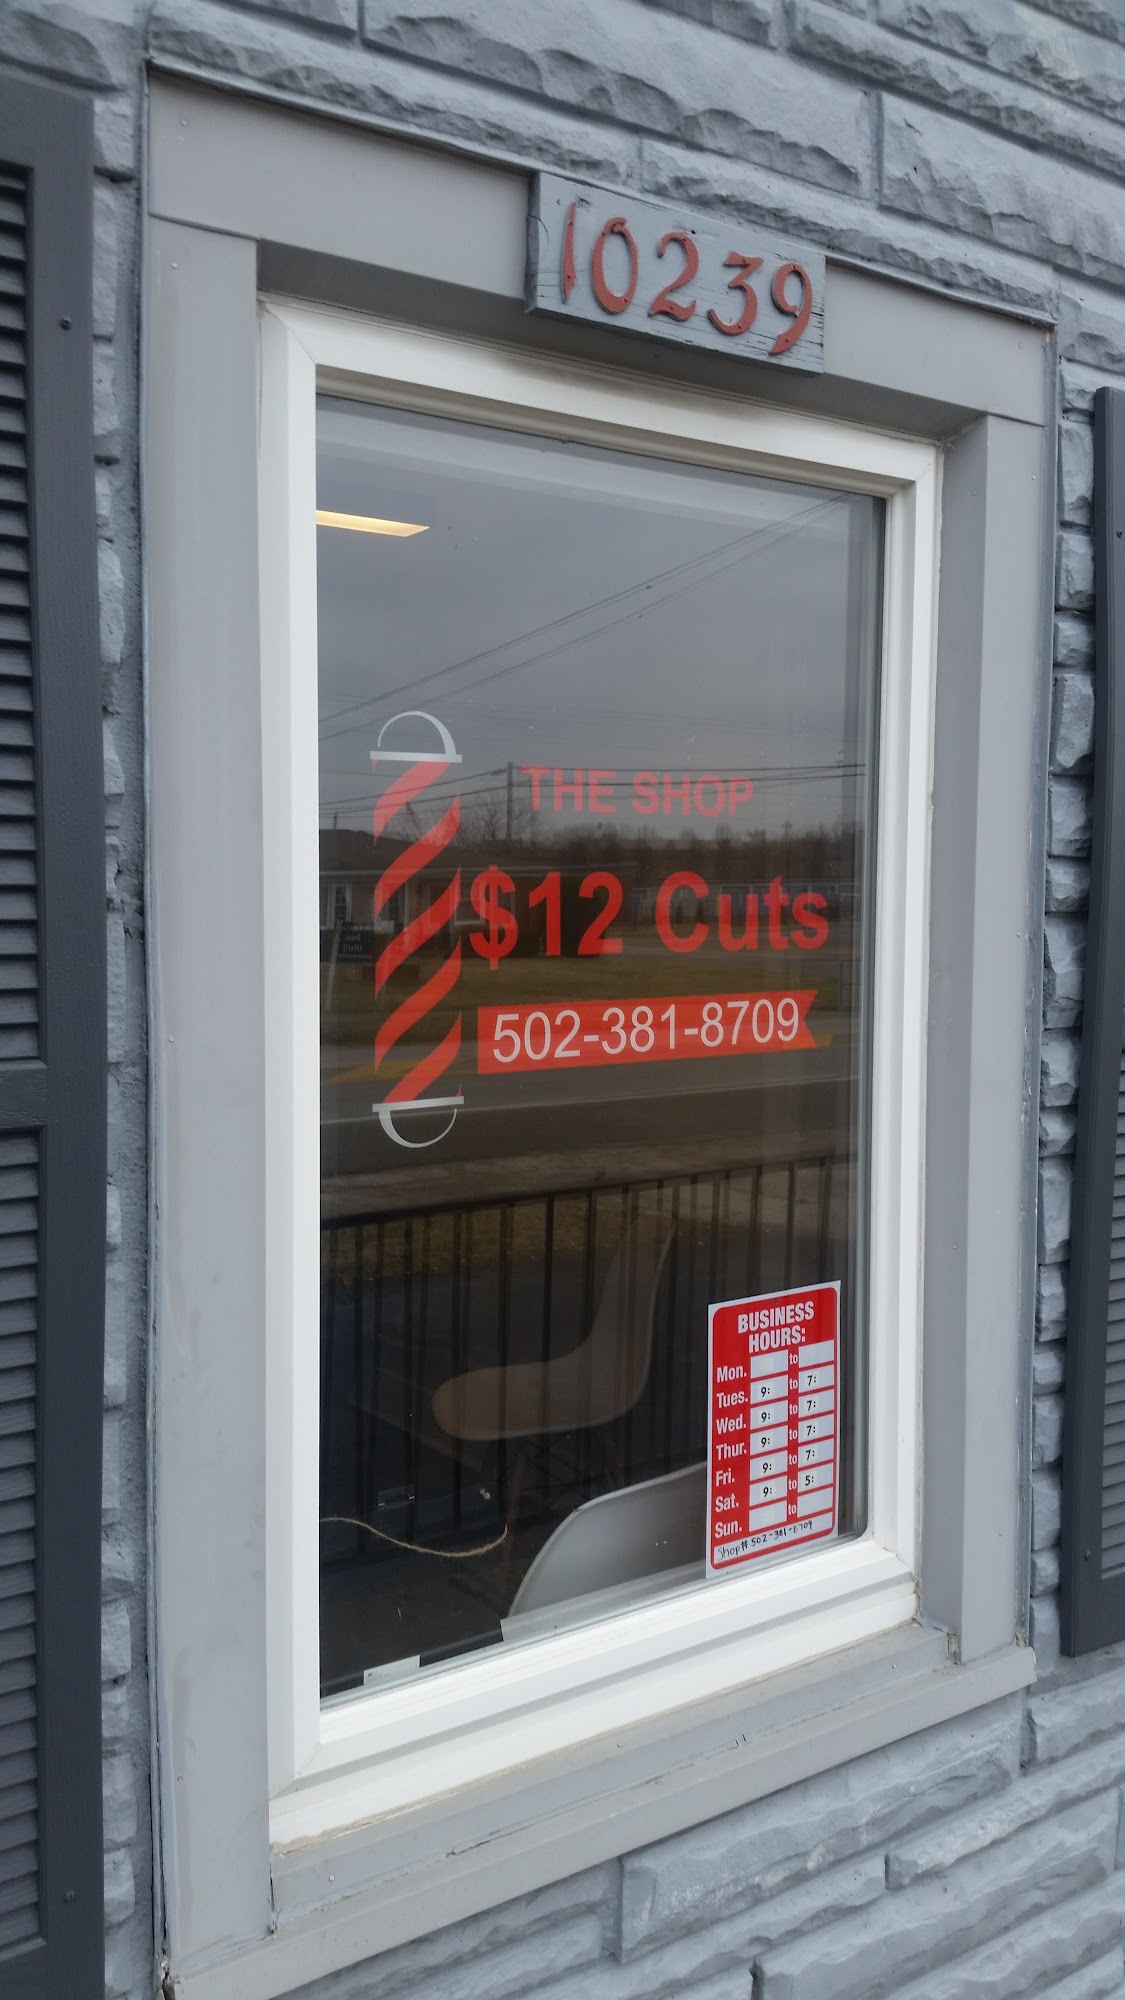 The Shop Barbershop 10239 KY-44, Mt Washington Kentucky 40047